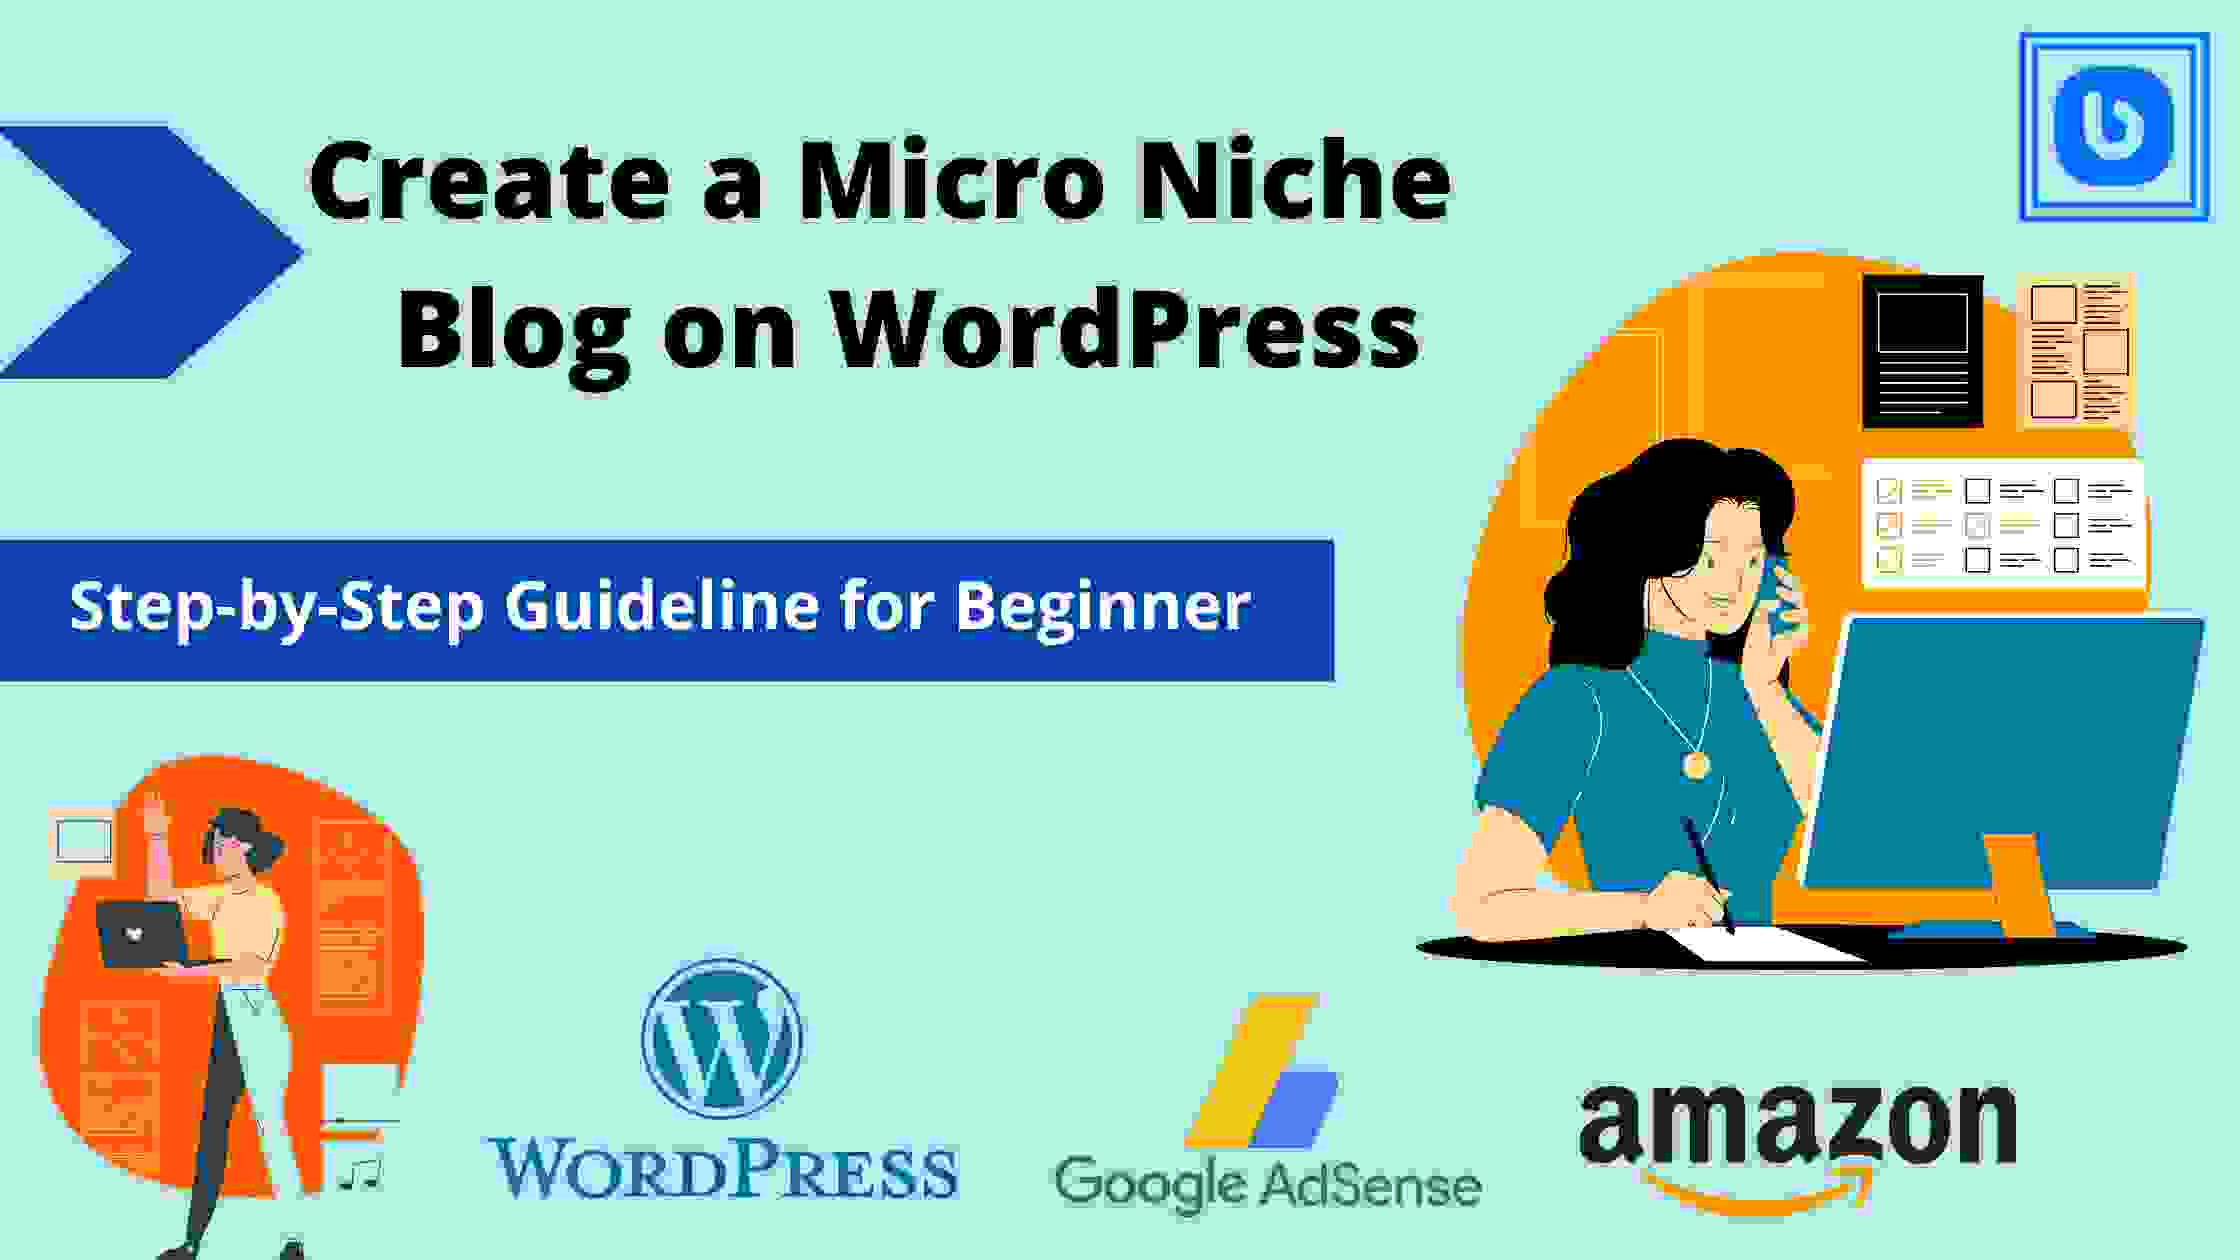 How to create a micro niche blog on WordPress as a Beginner